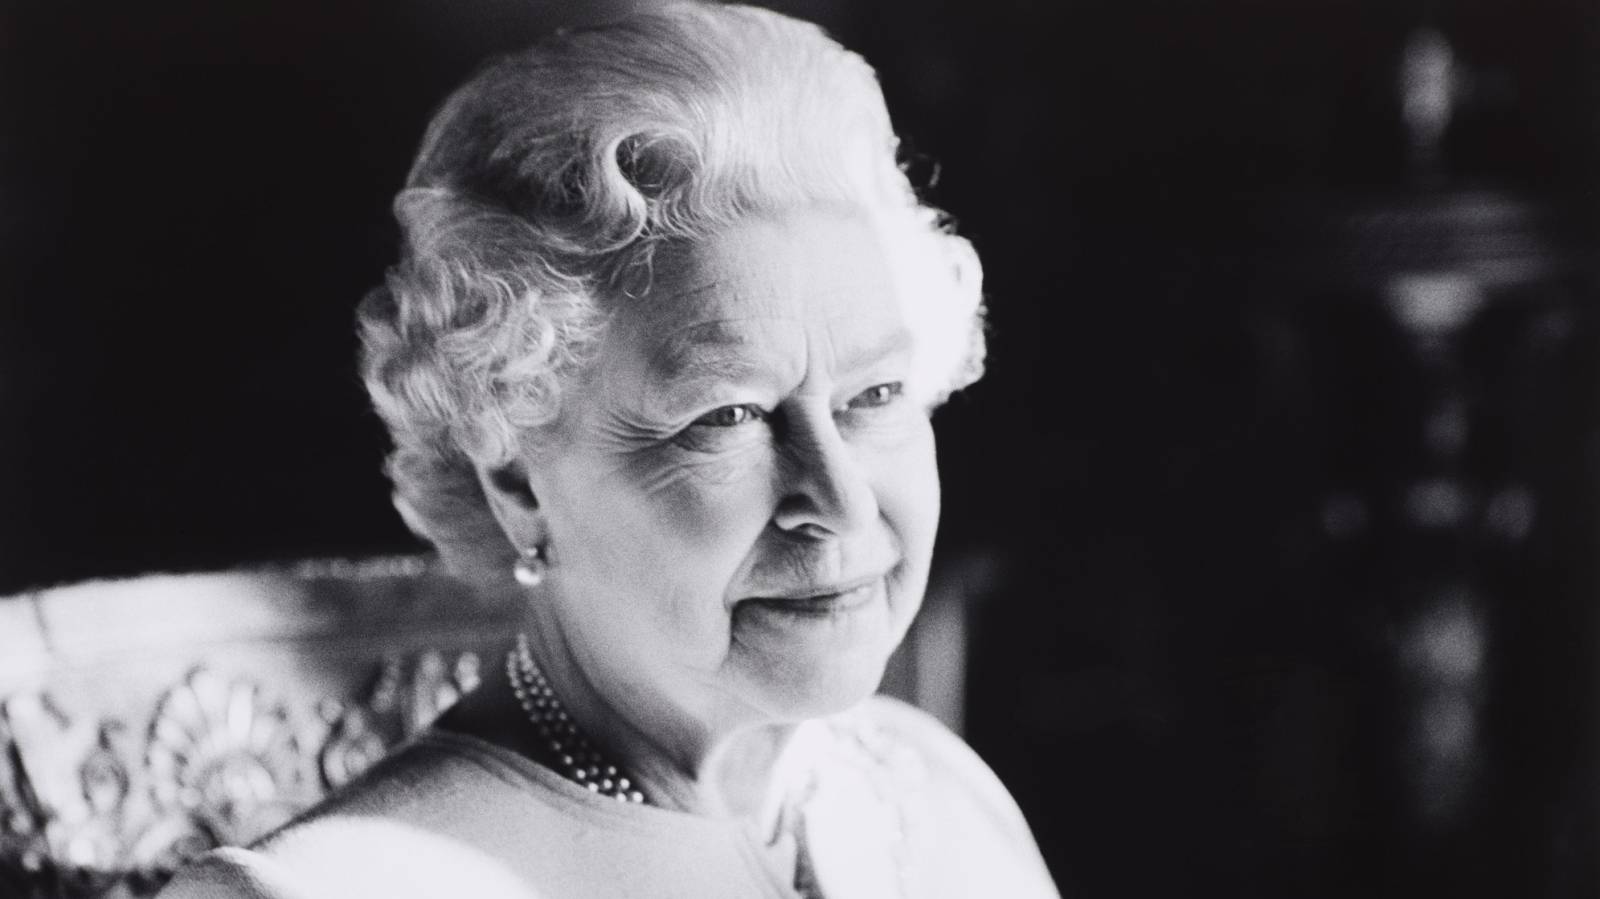 Statement on the death of Her Majesty Queen Elizabeth II 